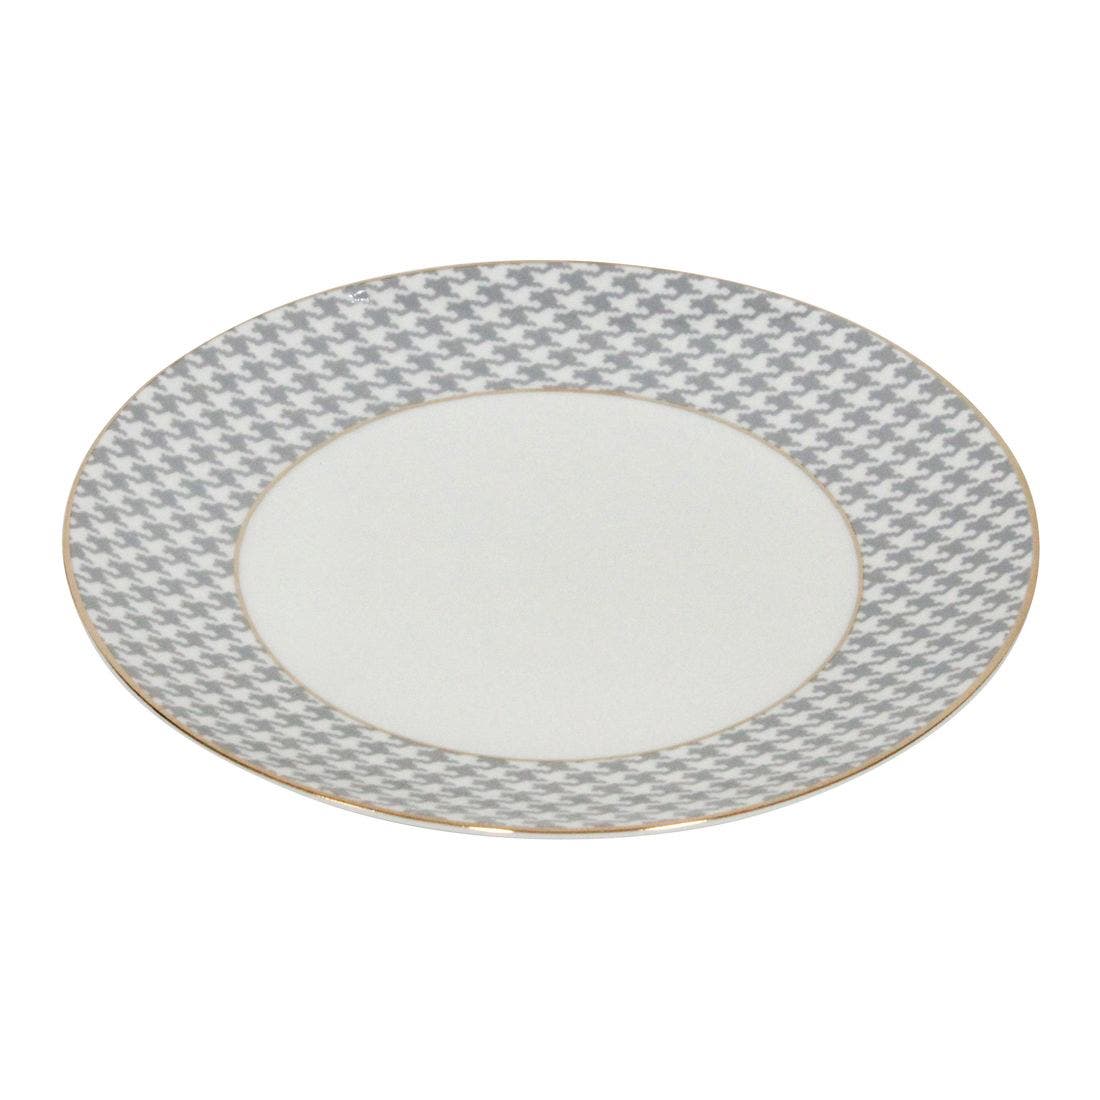 25029803-luxury-home-decor-tableware-kitchenware-plate-bowl-01